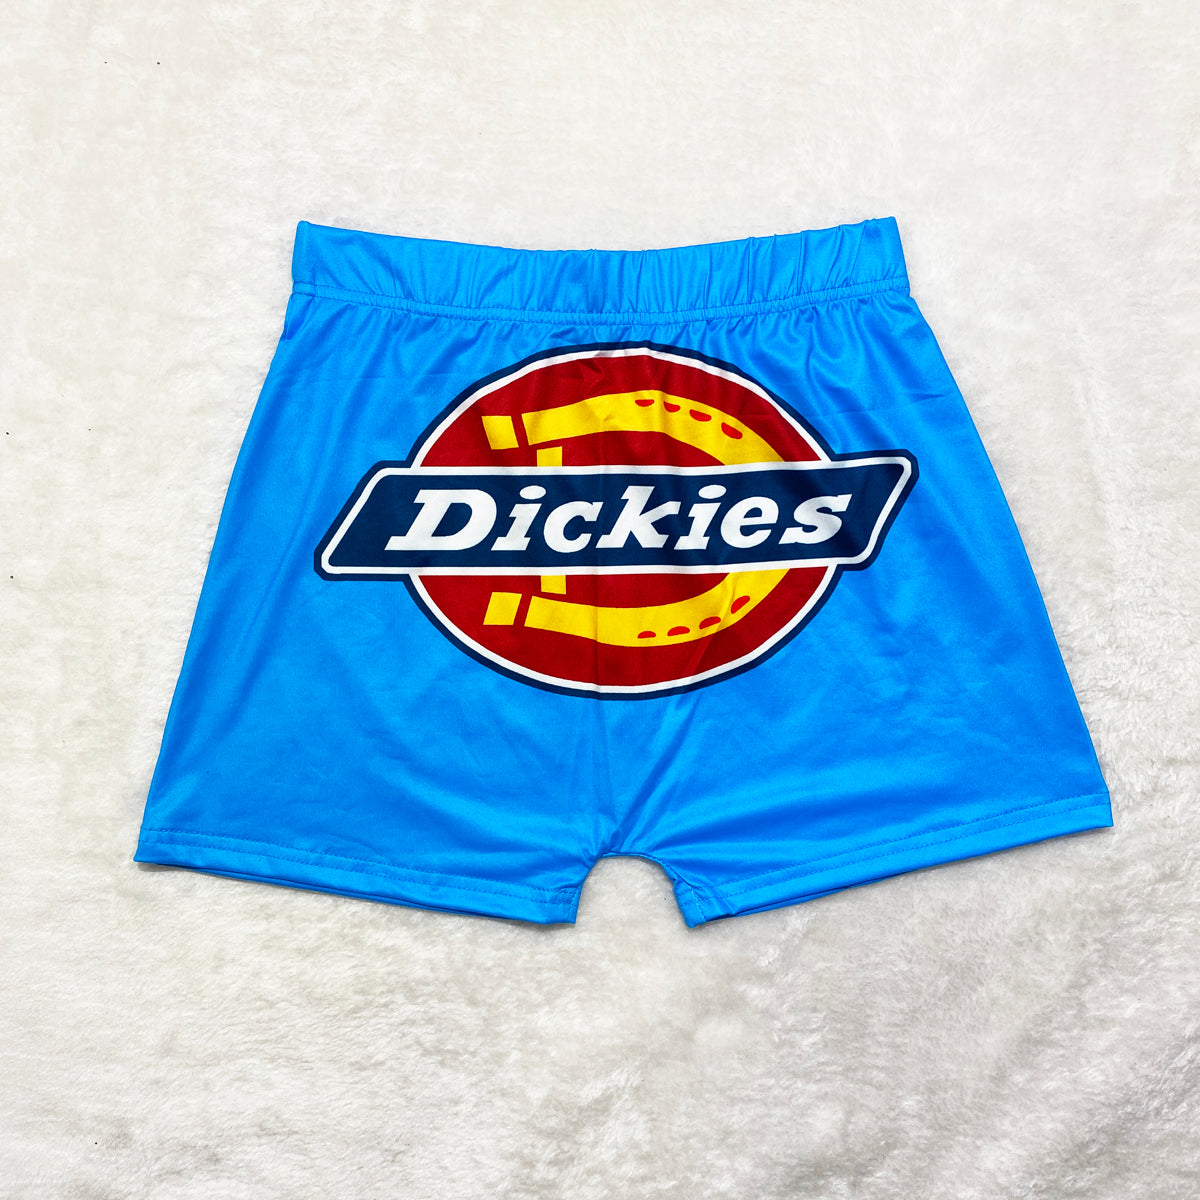 “Dickies” Shorts